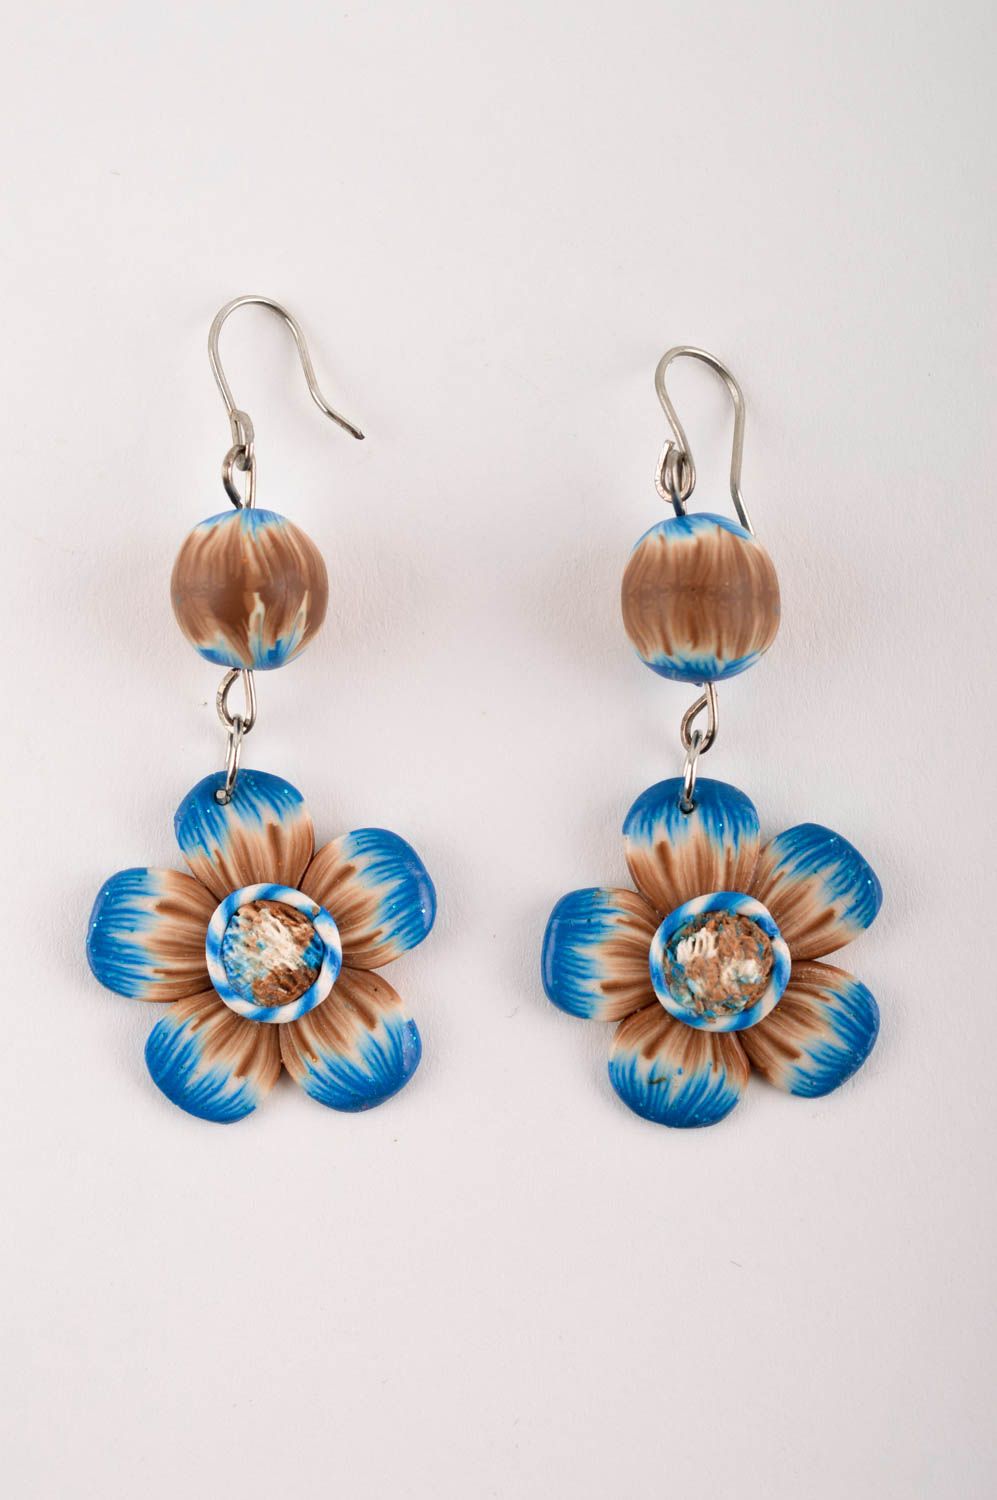 Unusual handmade plastic earrings artisan jewelry designs flower earrings photo 3